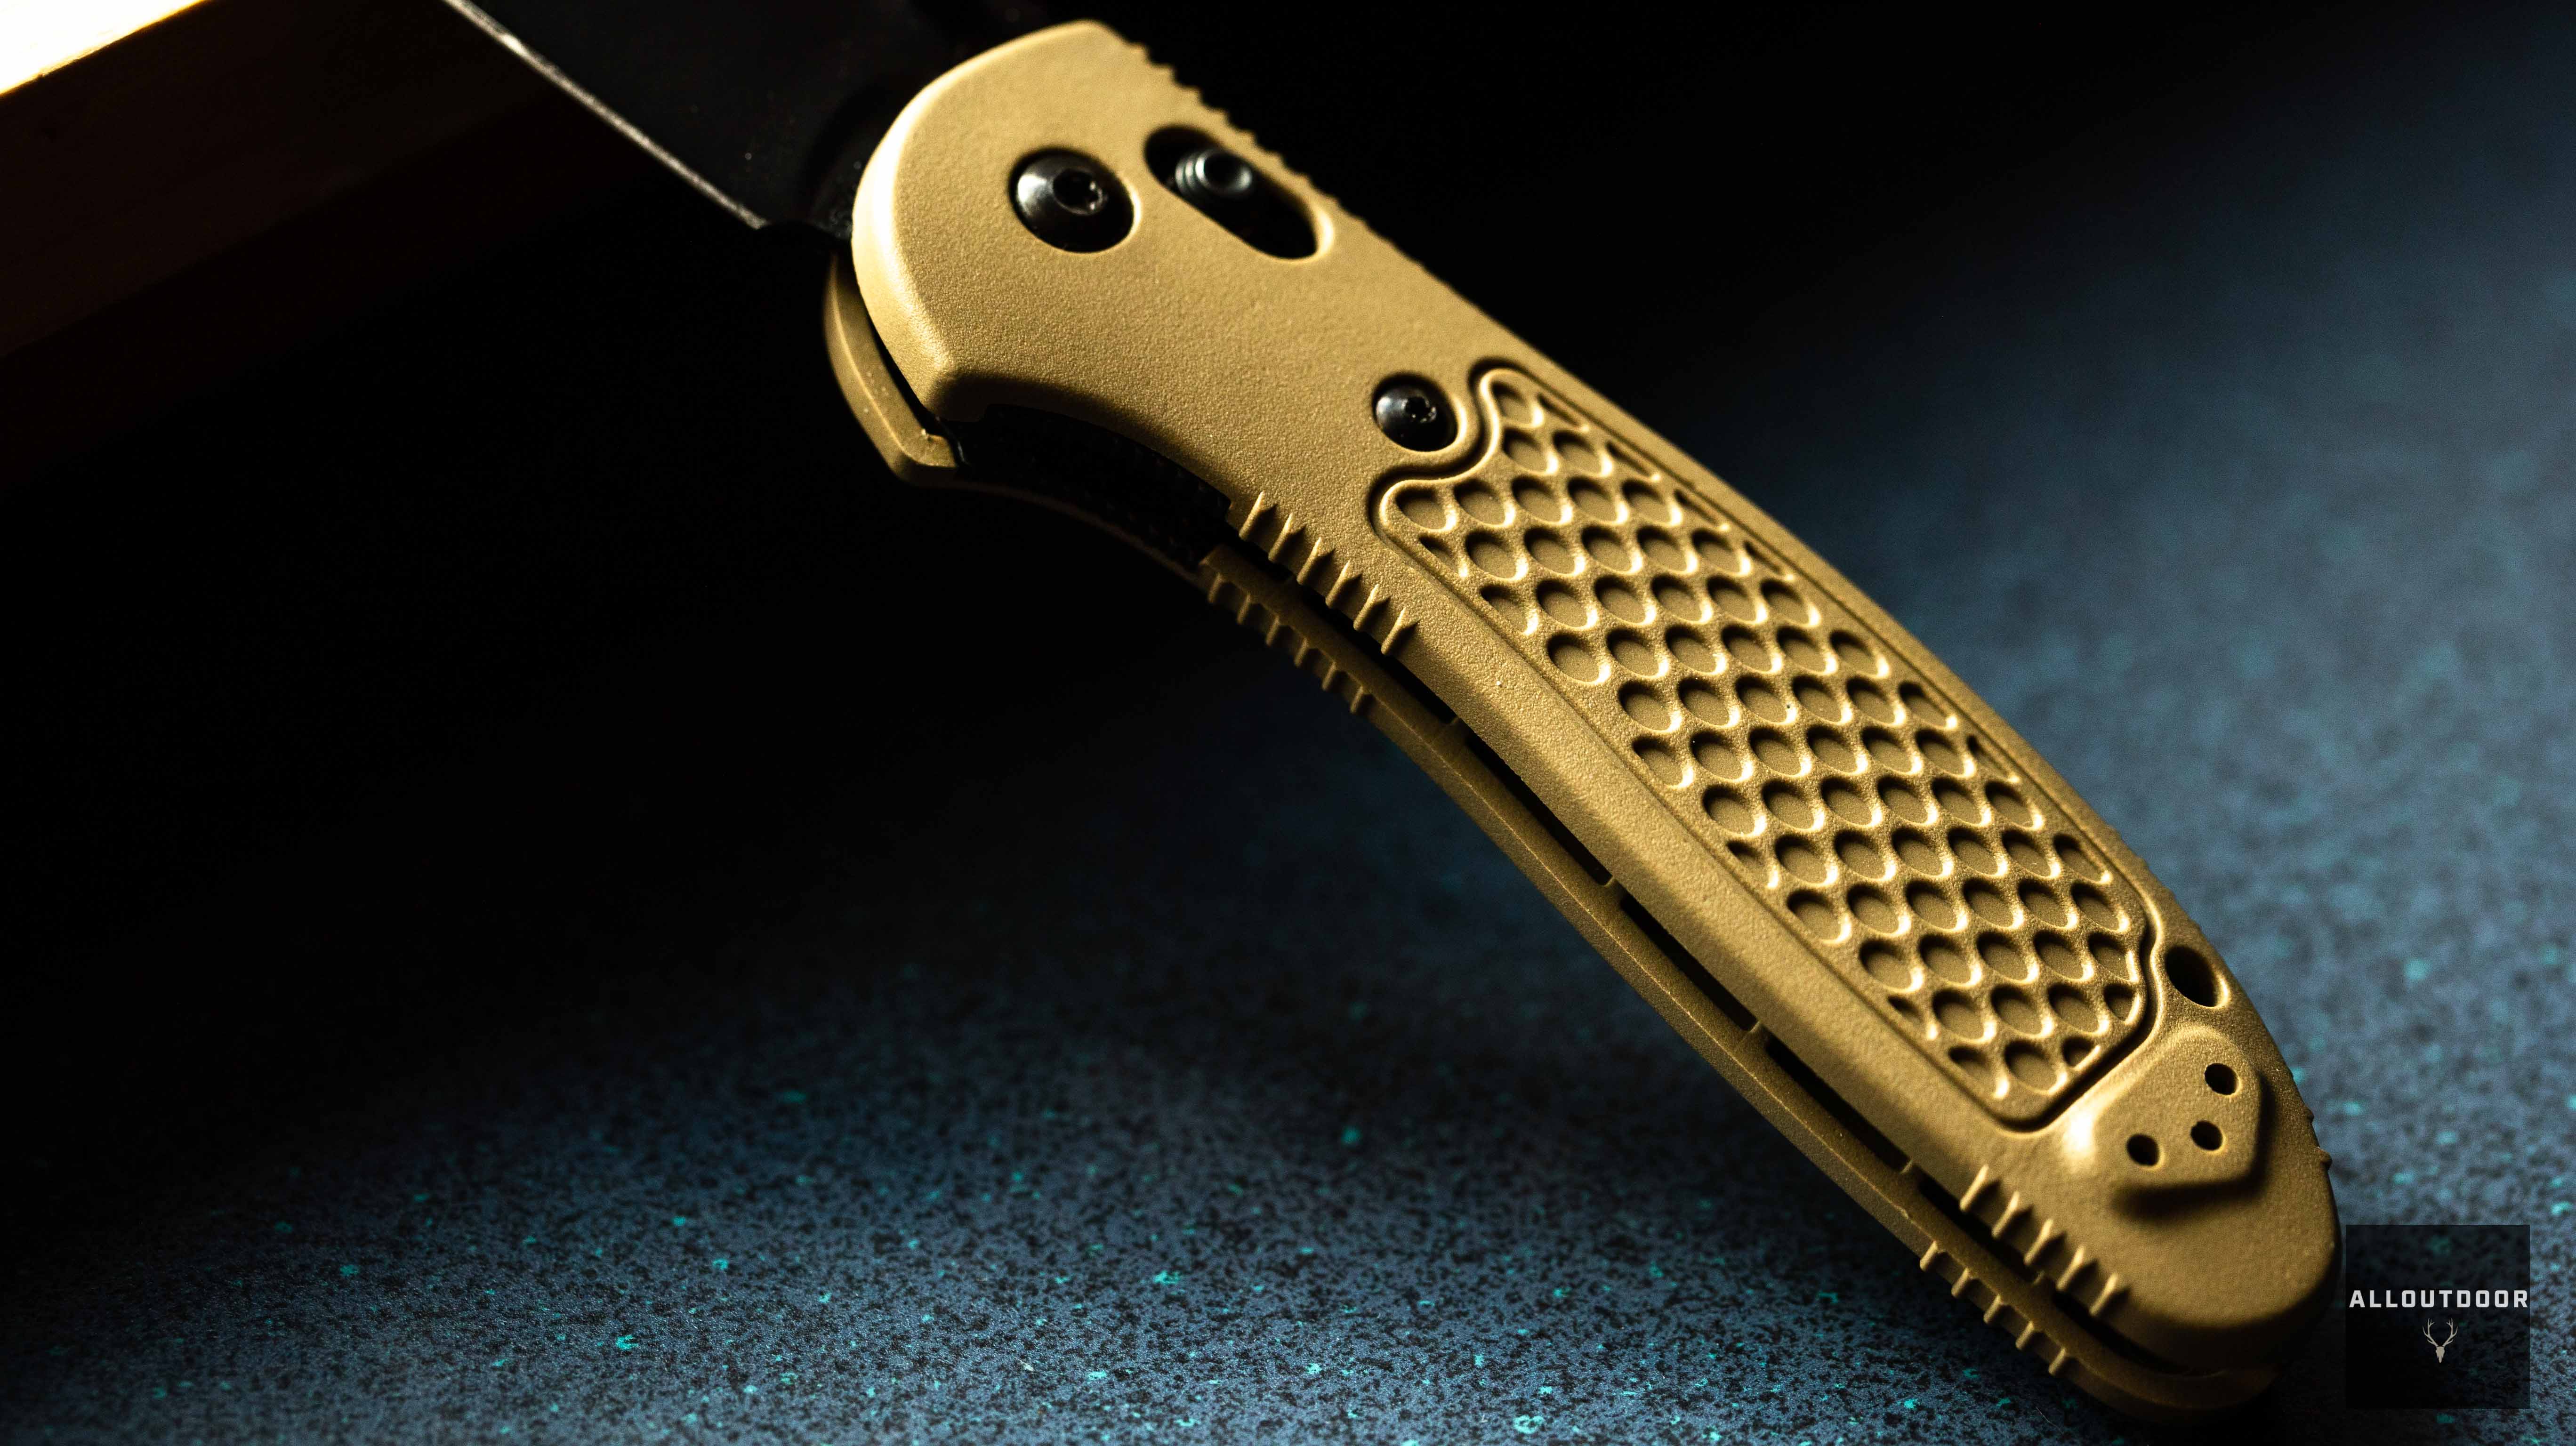 AllOutdoor Review - Benchmade Griptilian Multi-Functional 551-S30V Knife